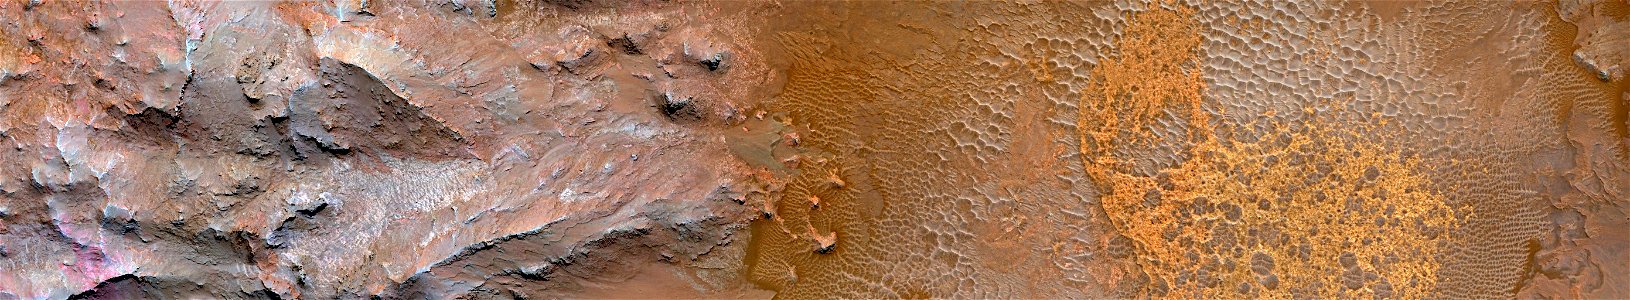 Mars - Ripples and Transverse Aeolian Ridges in Elorza Crater